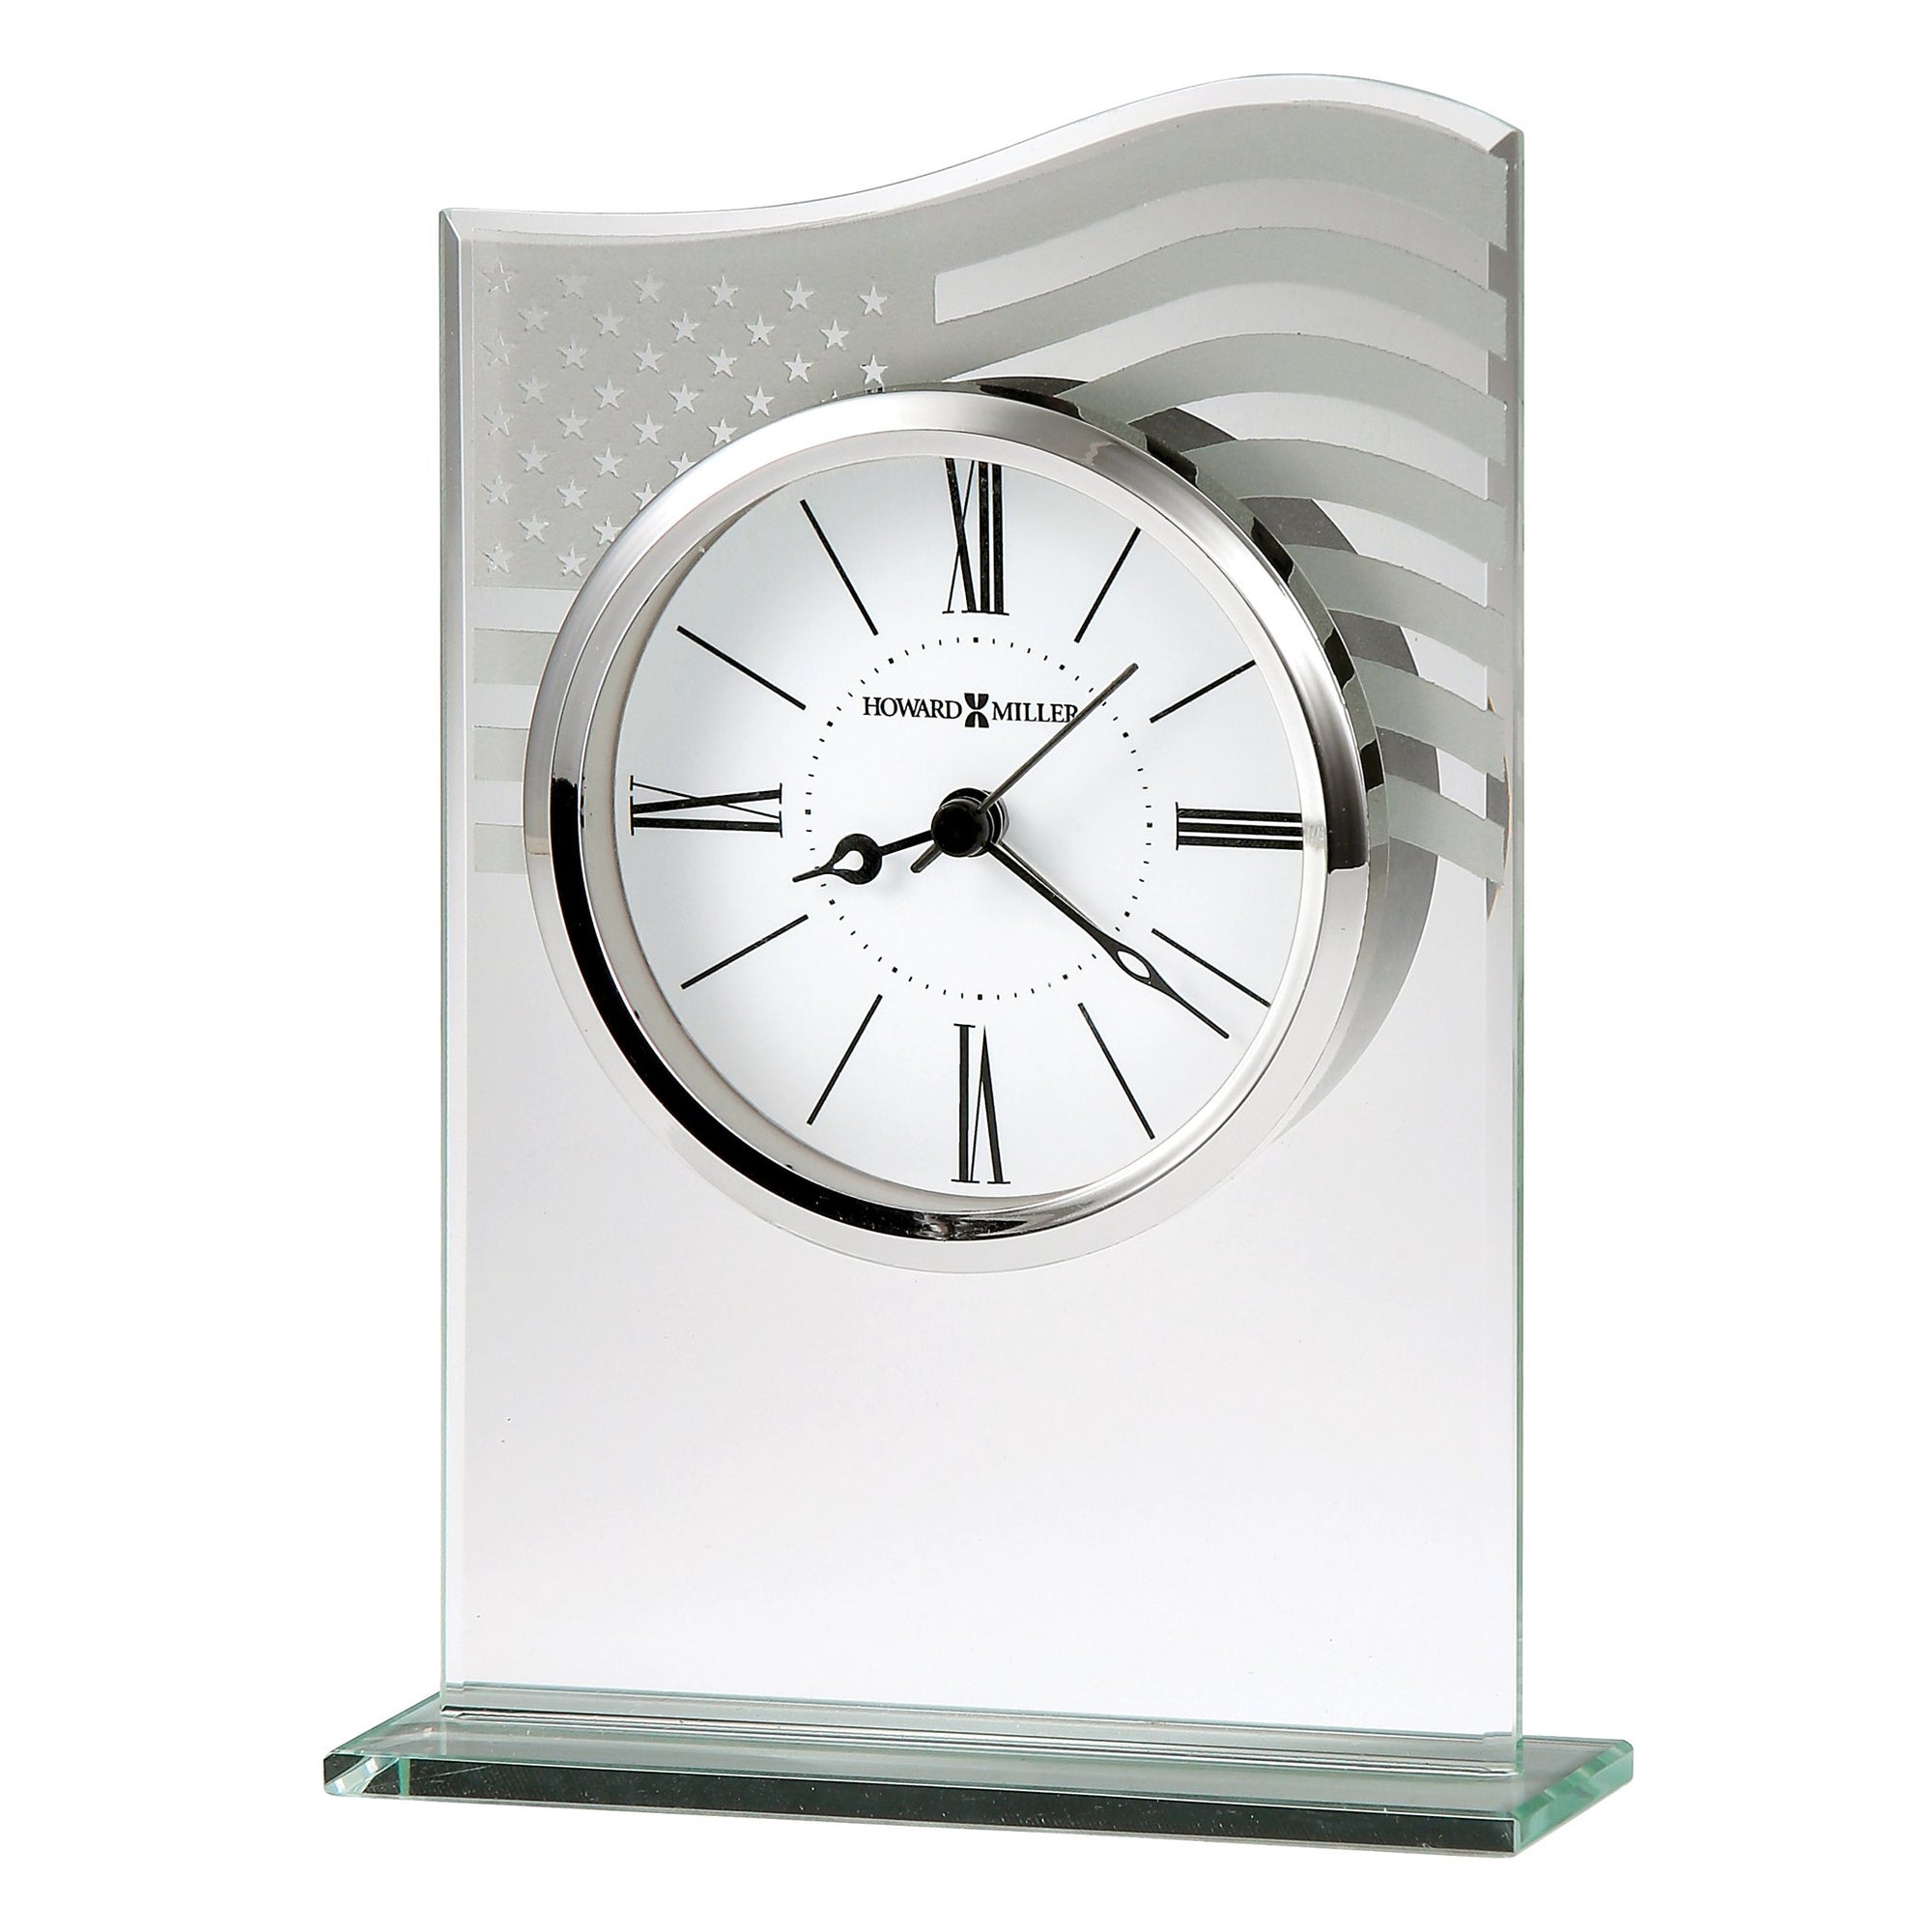 Howard Miller Liberty Table Clock 645779 - Premier Clocks